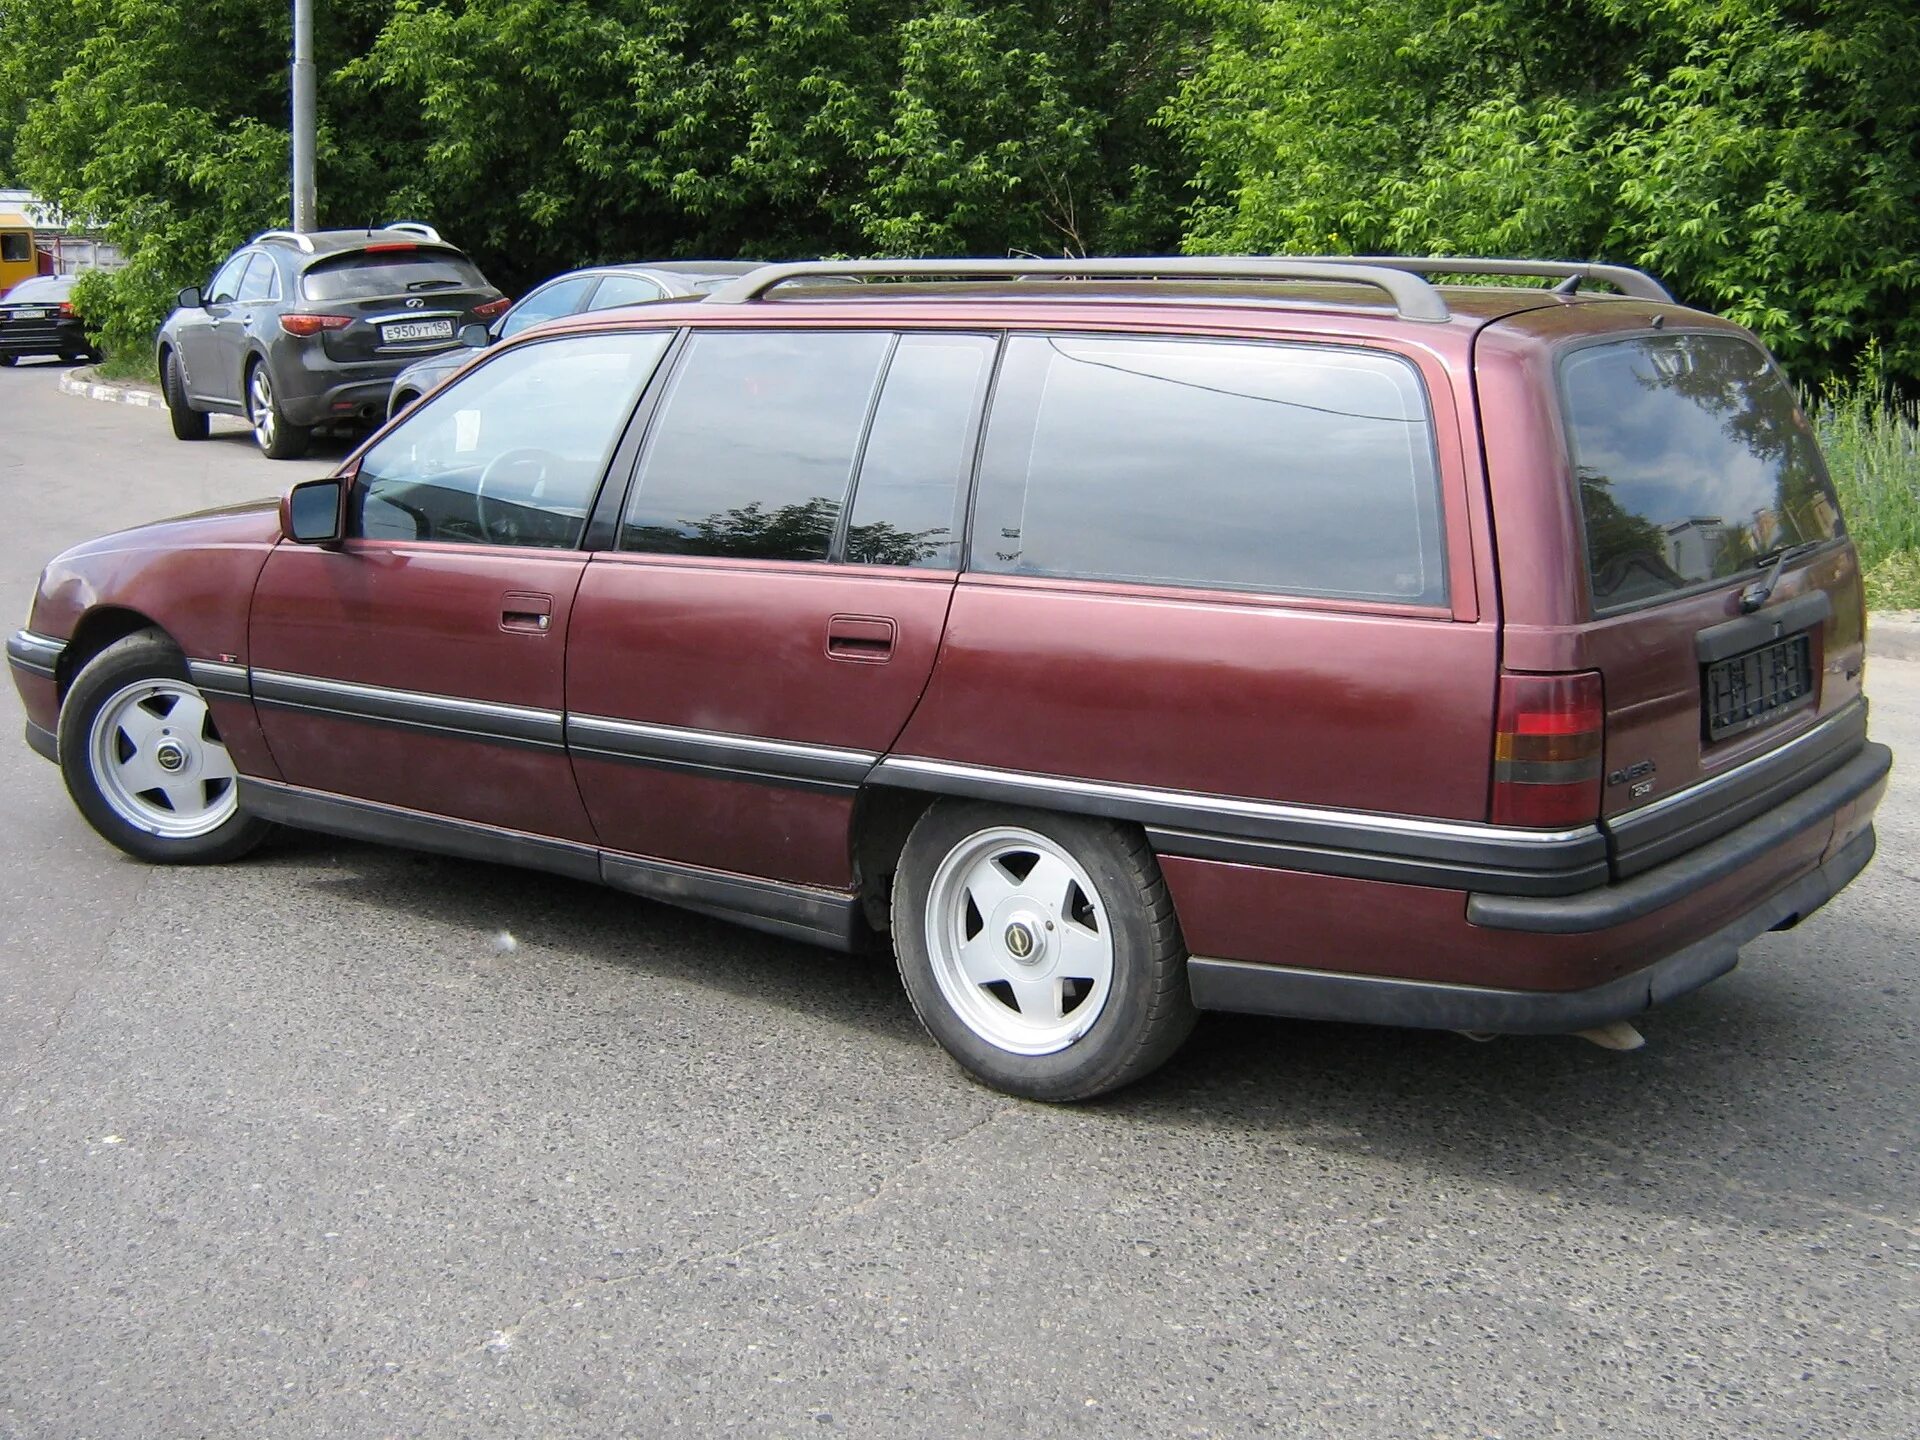 Opel Omega a Caravan. Opel Omega 1992 универсал. Опель Омега Караван 2 1989. Опель Омега 1986 универсал. Куплю опель омега б универсал